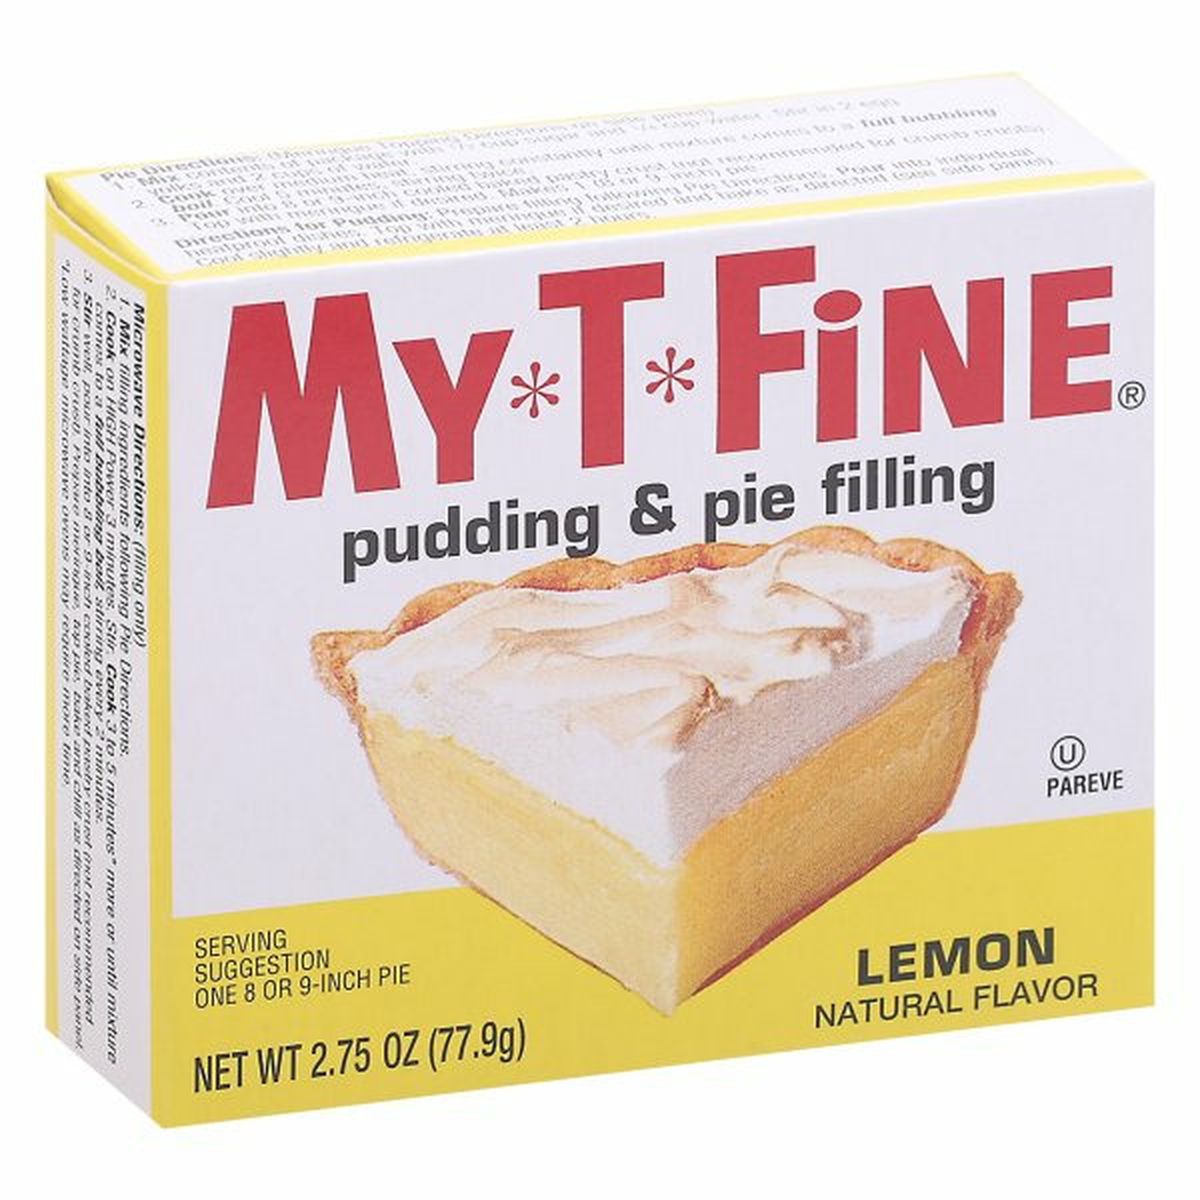 Calories in My-T-Fine Pudding & Pie Filling, Lemon